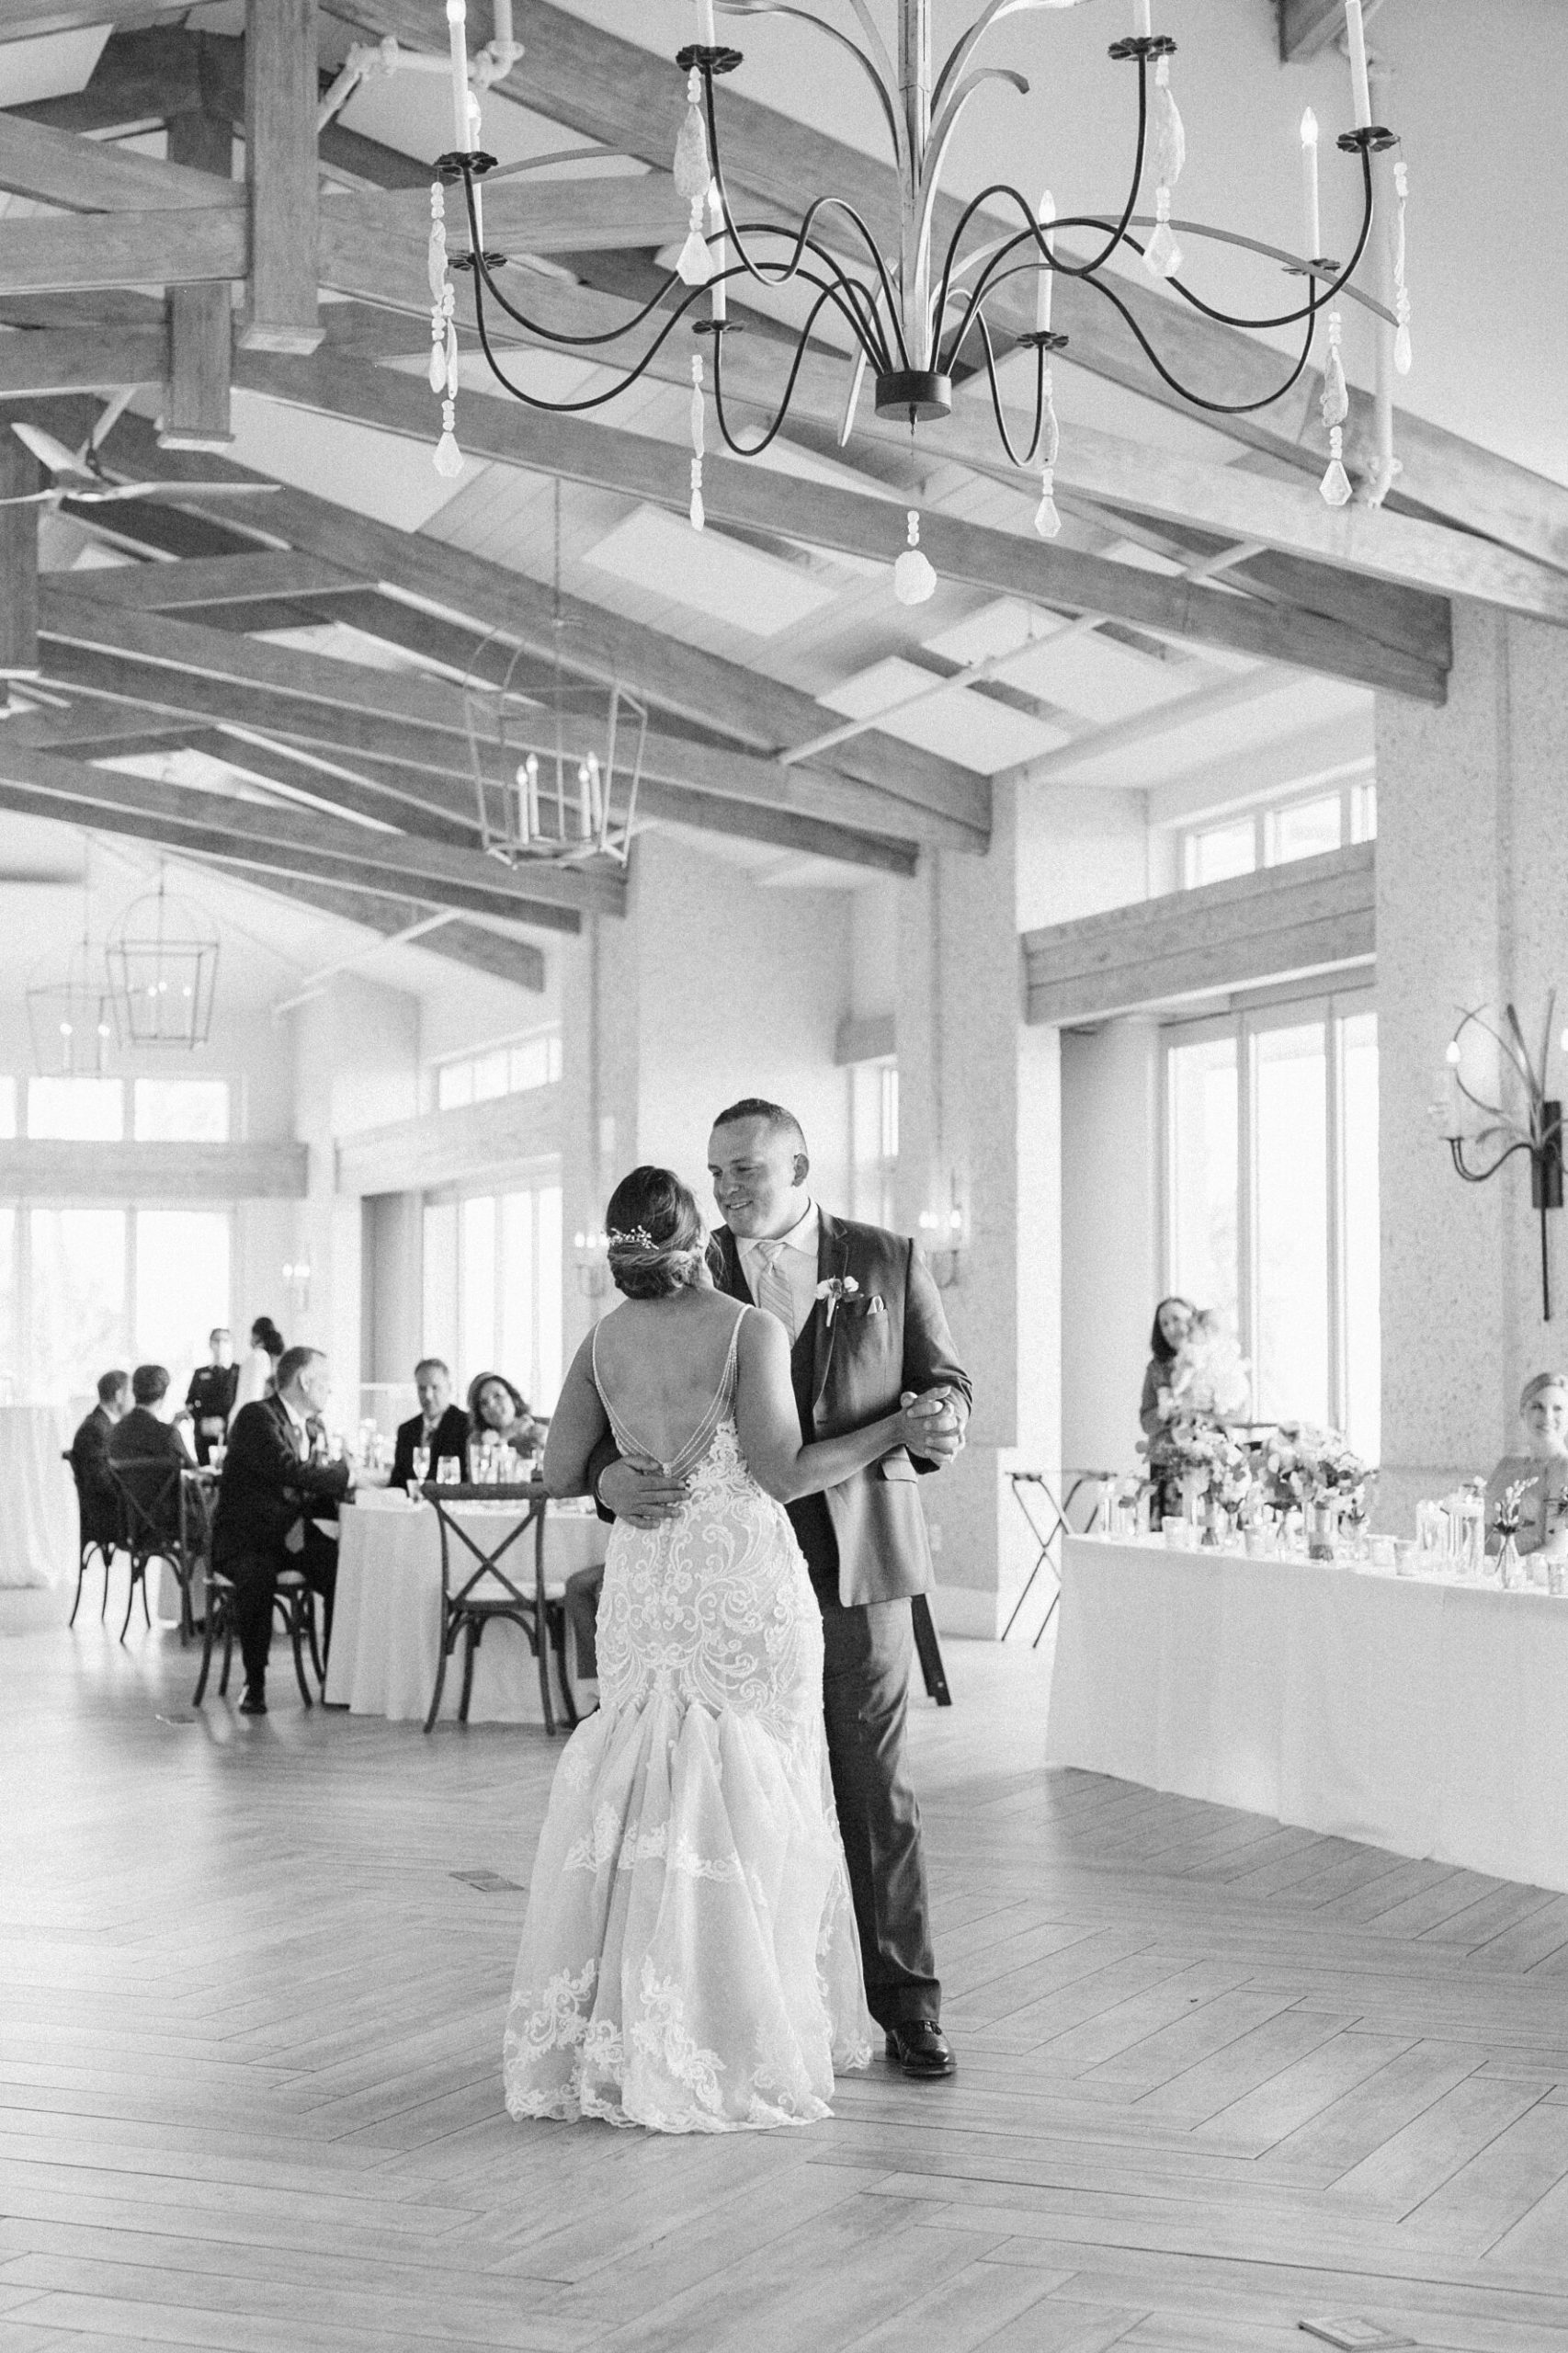 Sweet first dance as newlyweds at Hilton Head Island wedding photographer.